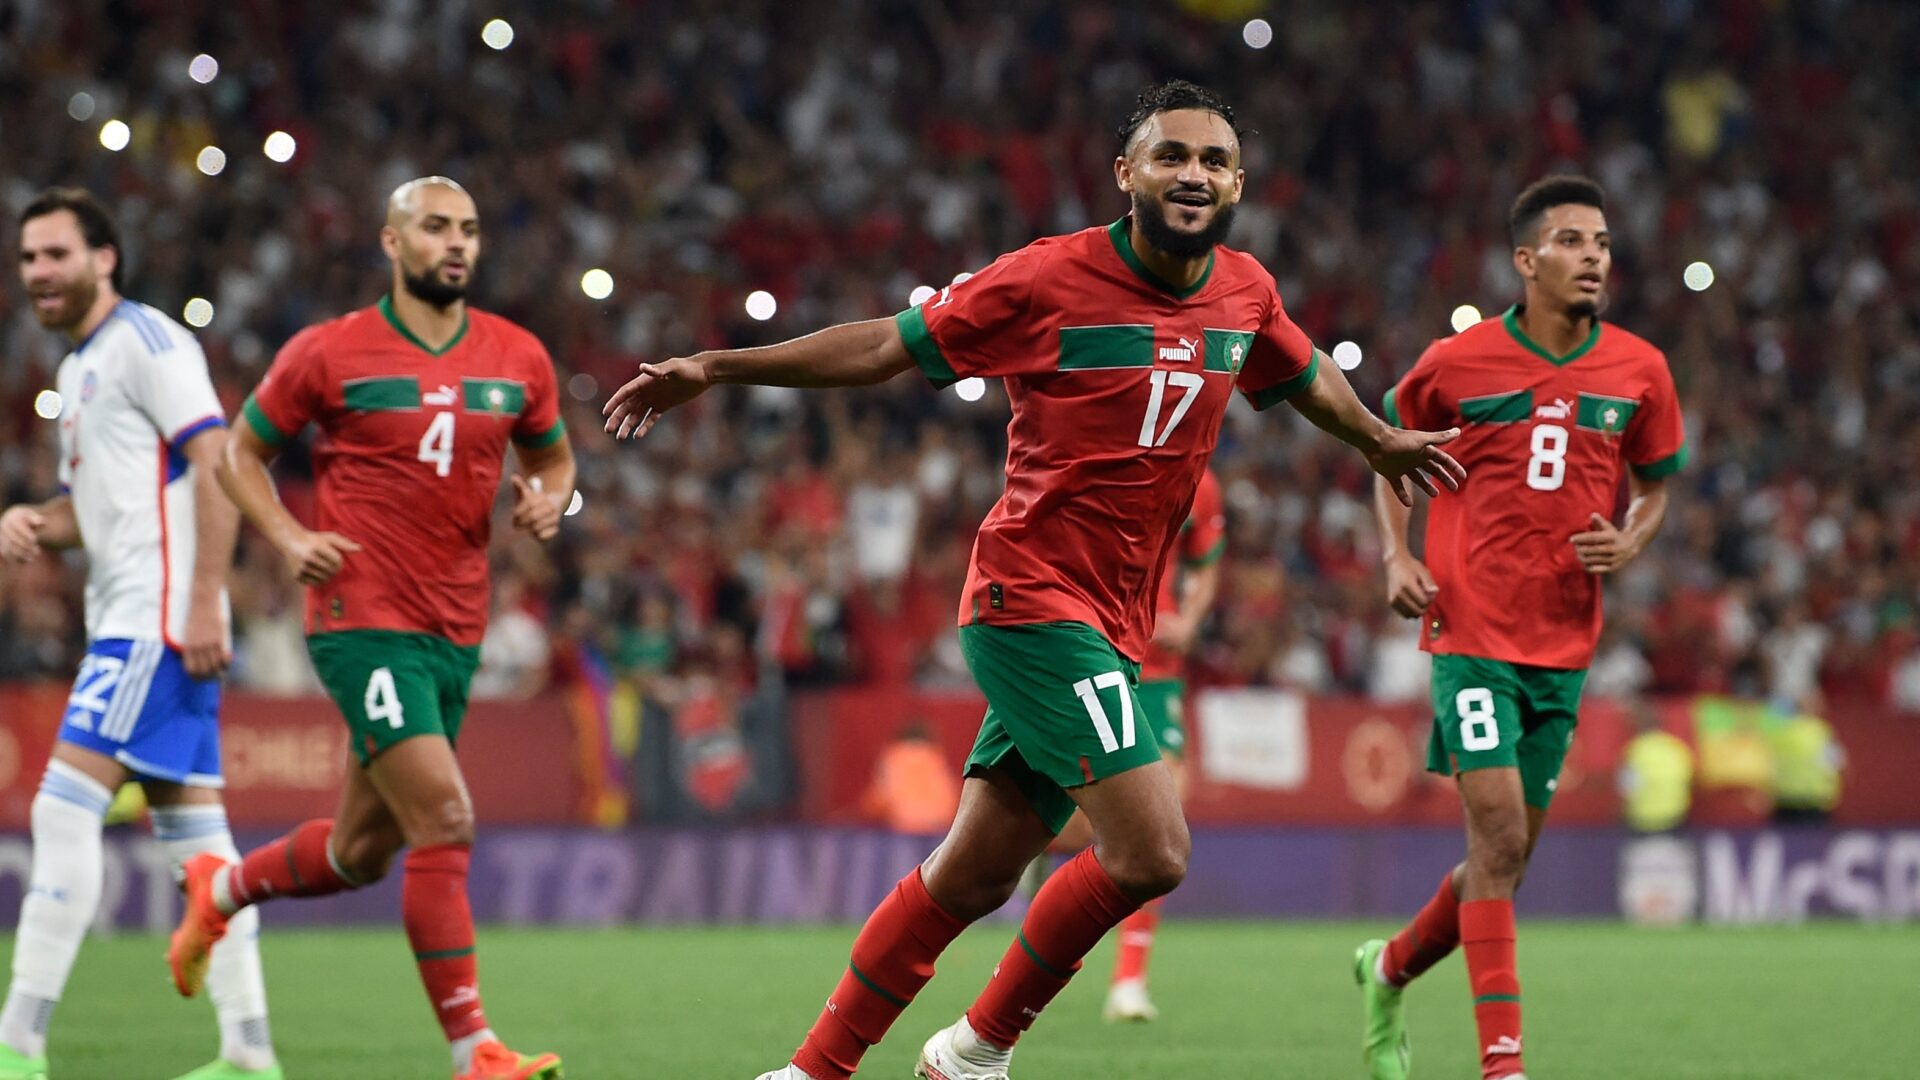 Maroc quả bom nổ lớn nhất tại World Cup 2022 